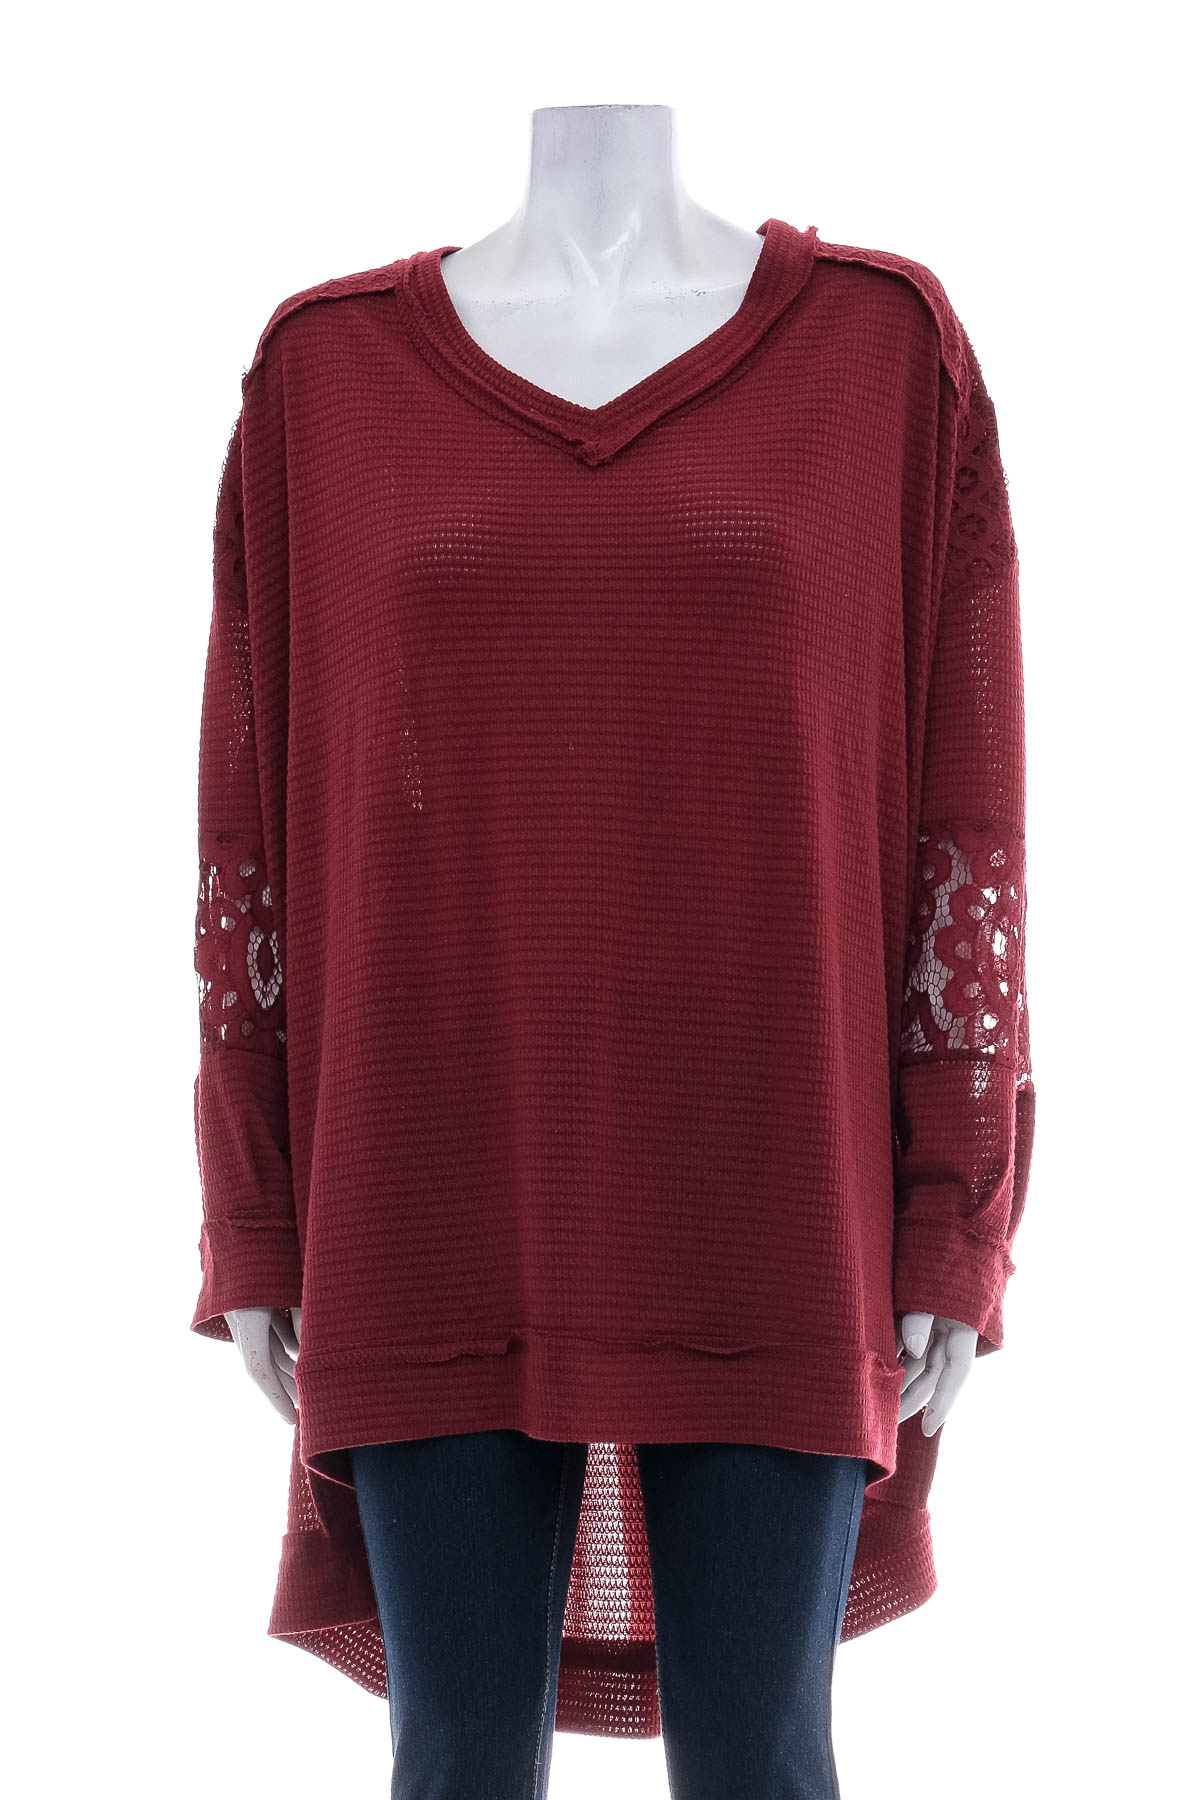 Women's sweater - Torrid - 0